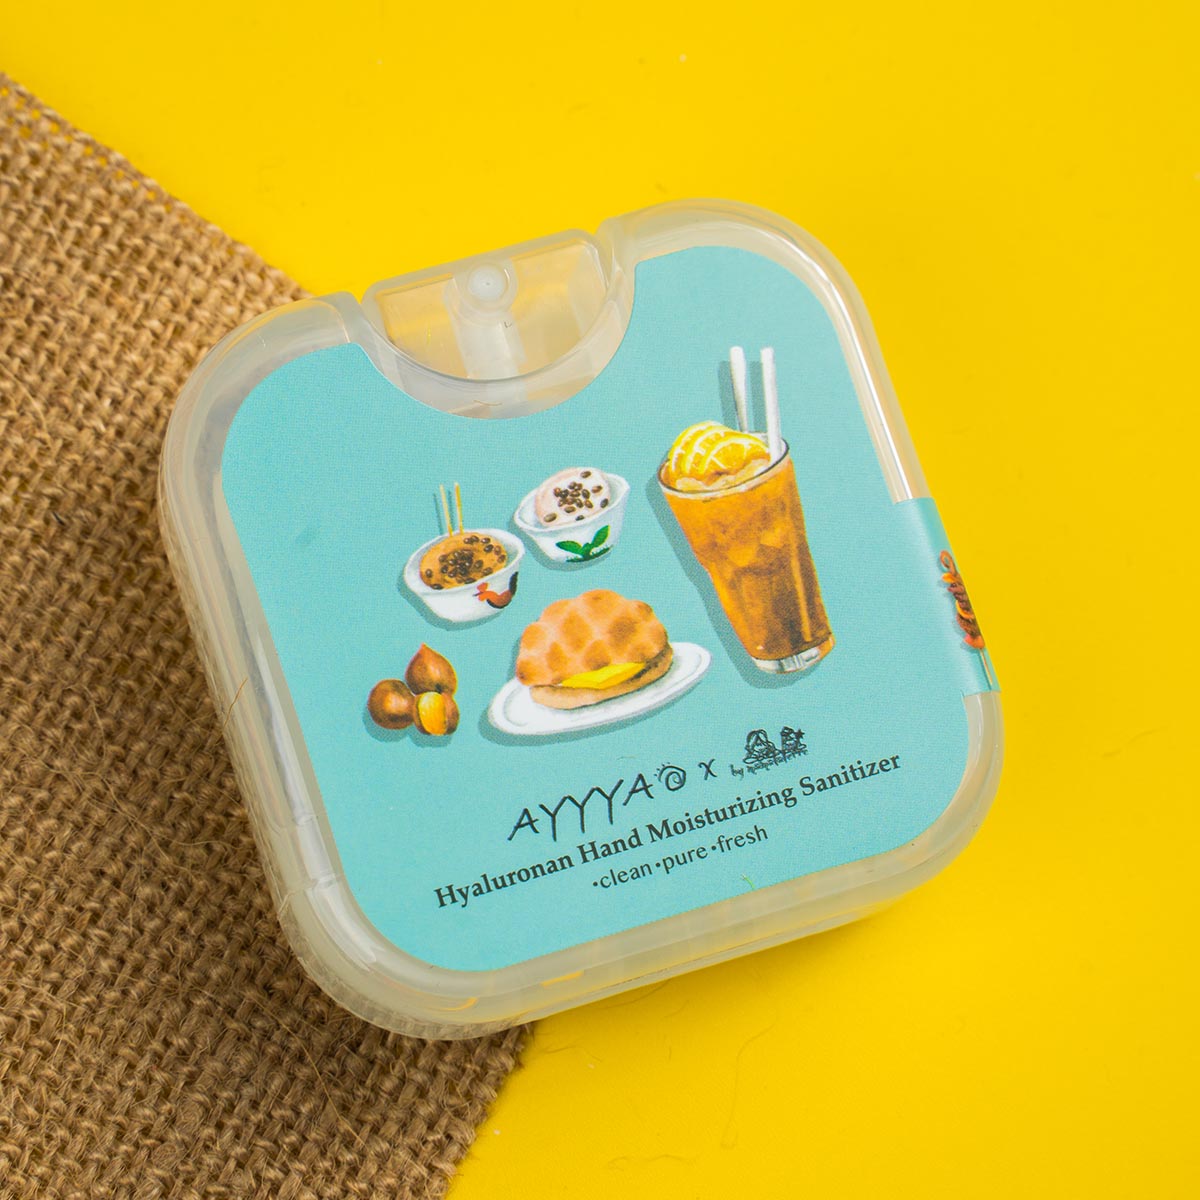 AYYYA保濕消毒香水-香港情懷系列 (港式檸檬茶COT) | Hyaluronan Moisturizing sanitizer HK series